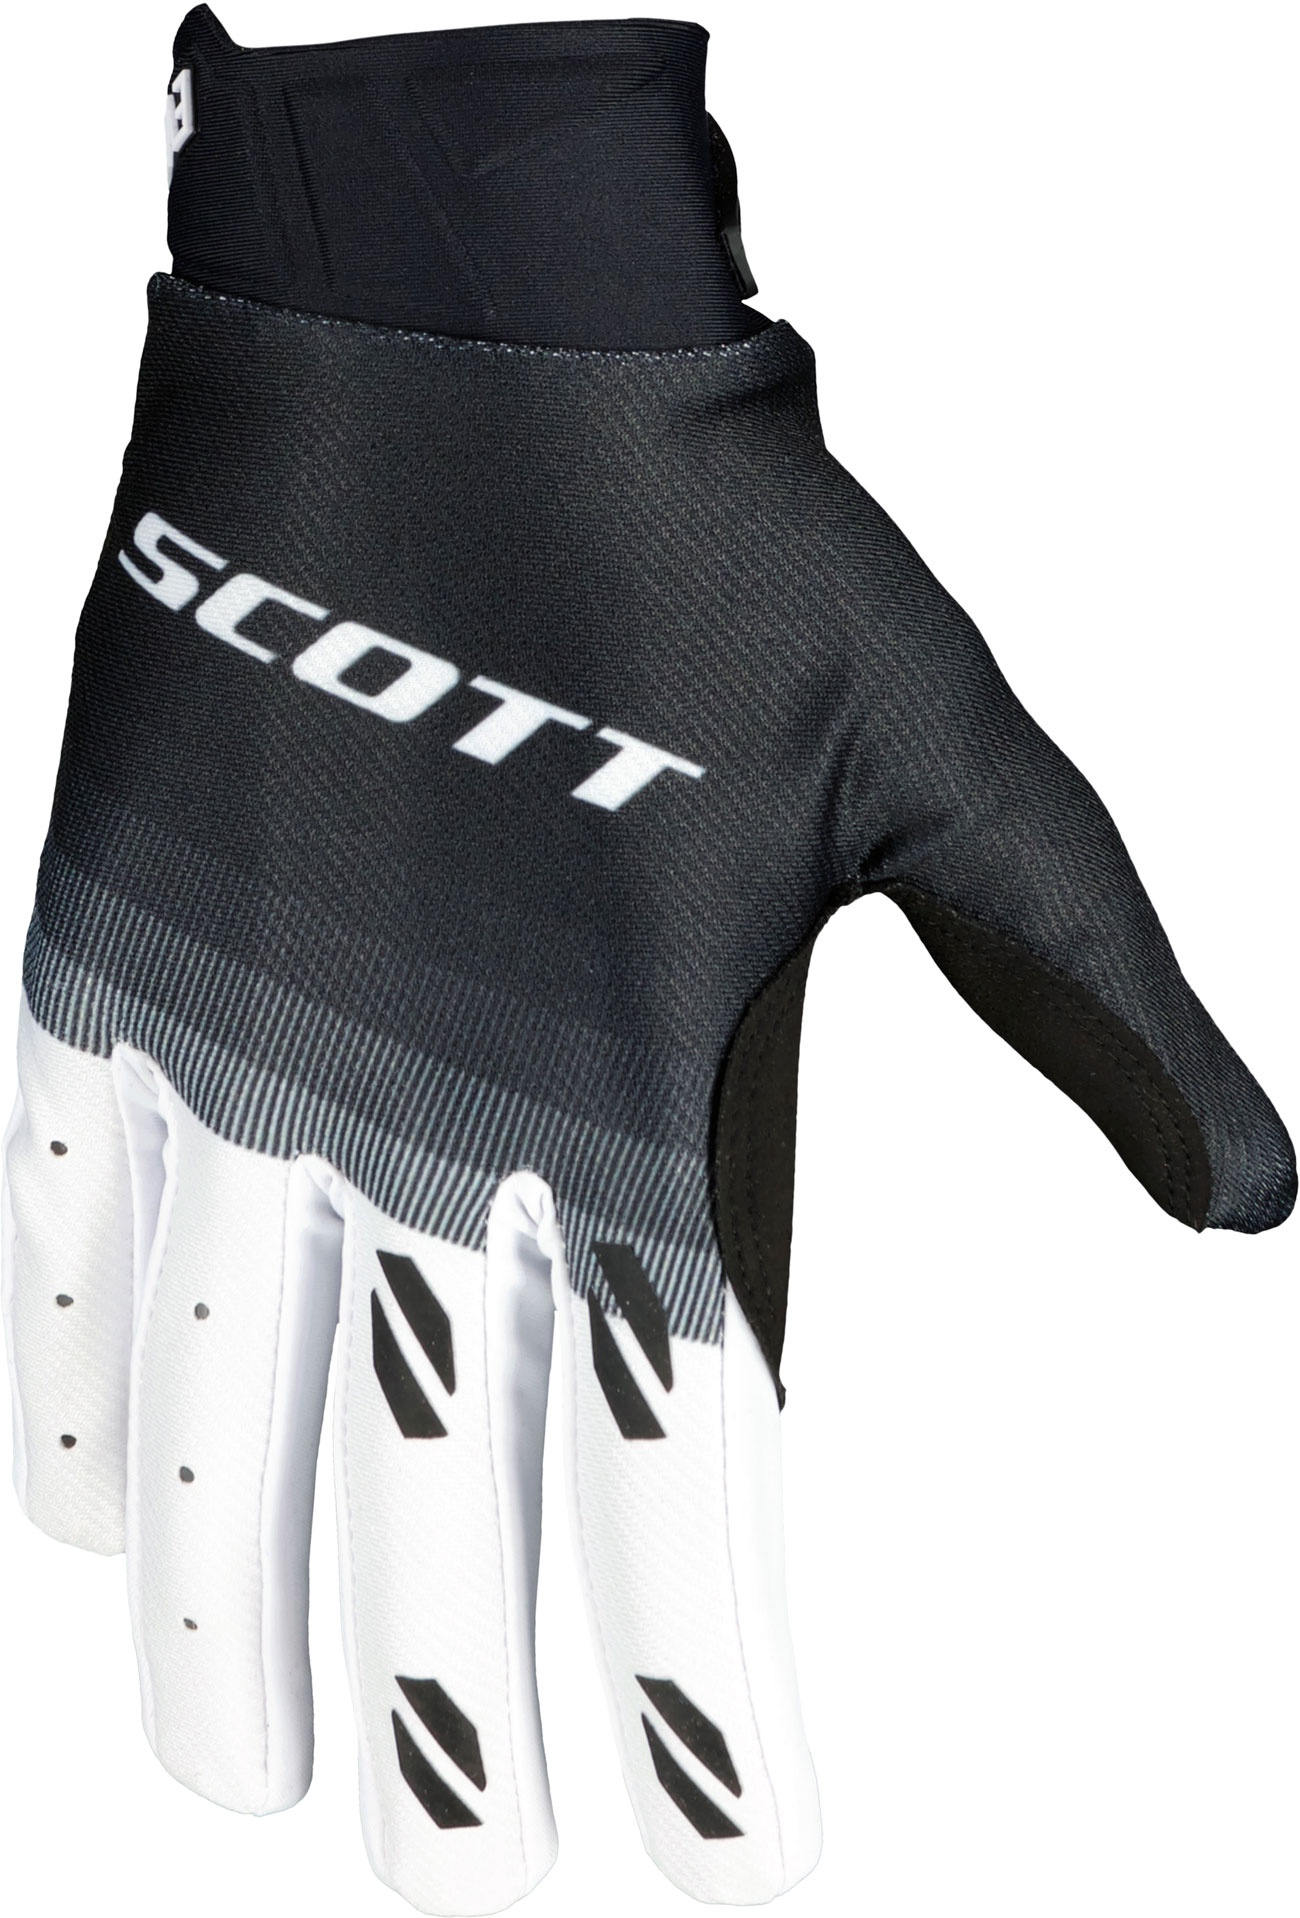 Scott Evo Fury S24, gants - Noir/Blanc - L